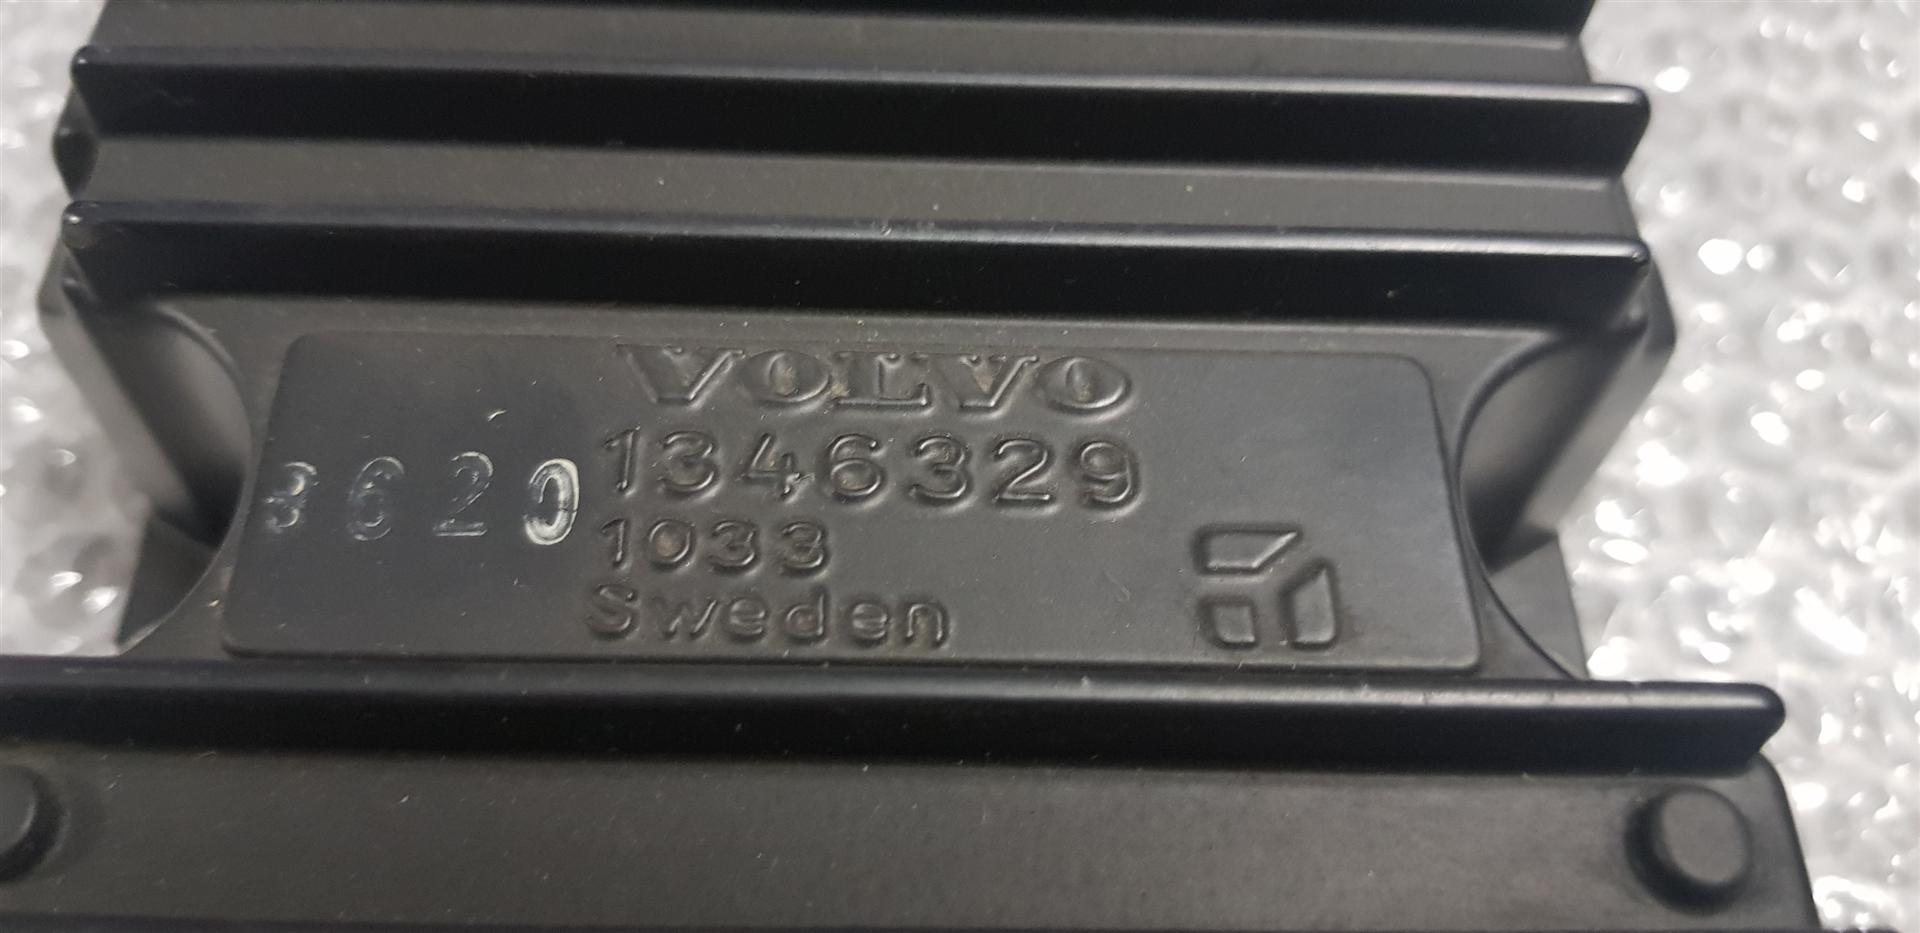 Modulo Volvo 13463029 - Ecu